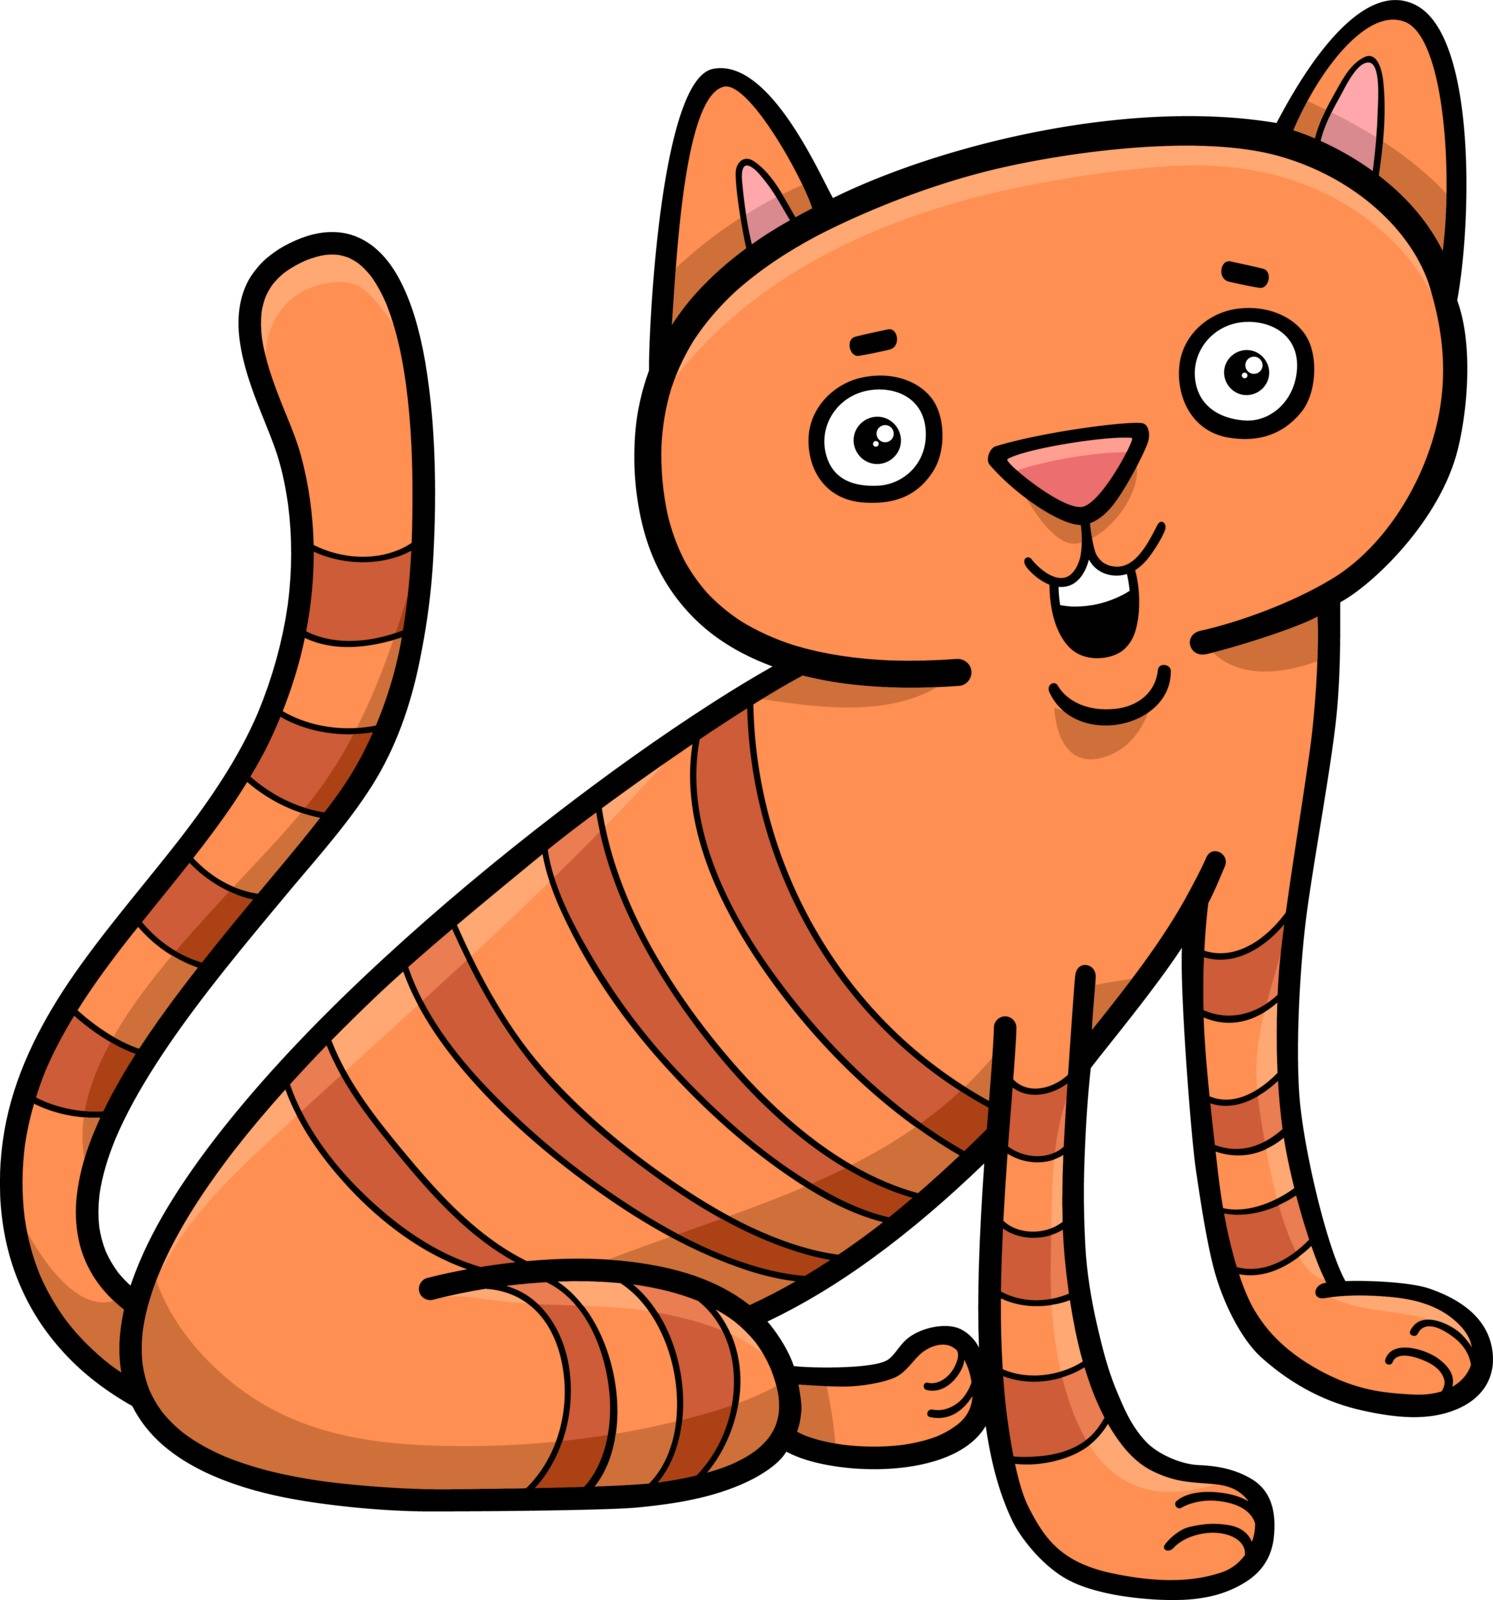 cat animal character by izakowski